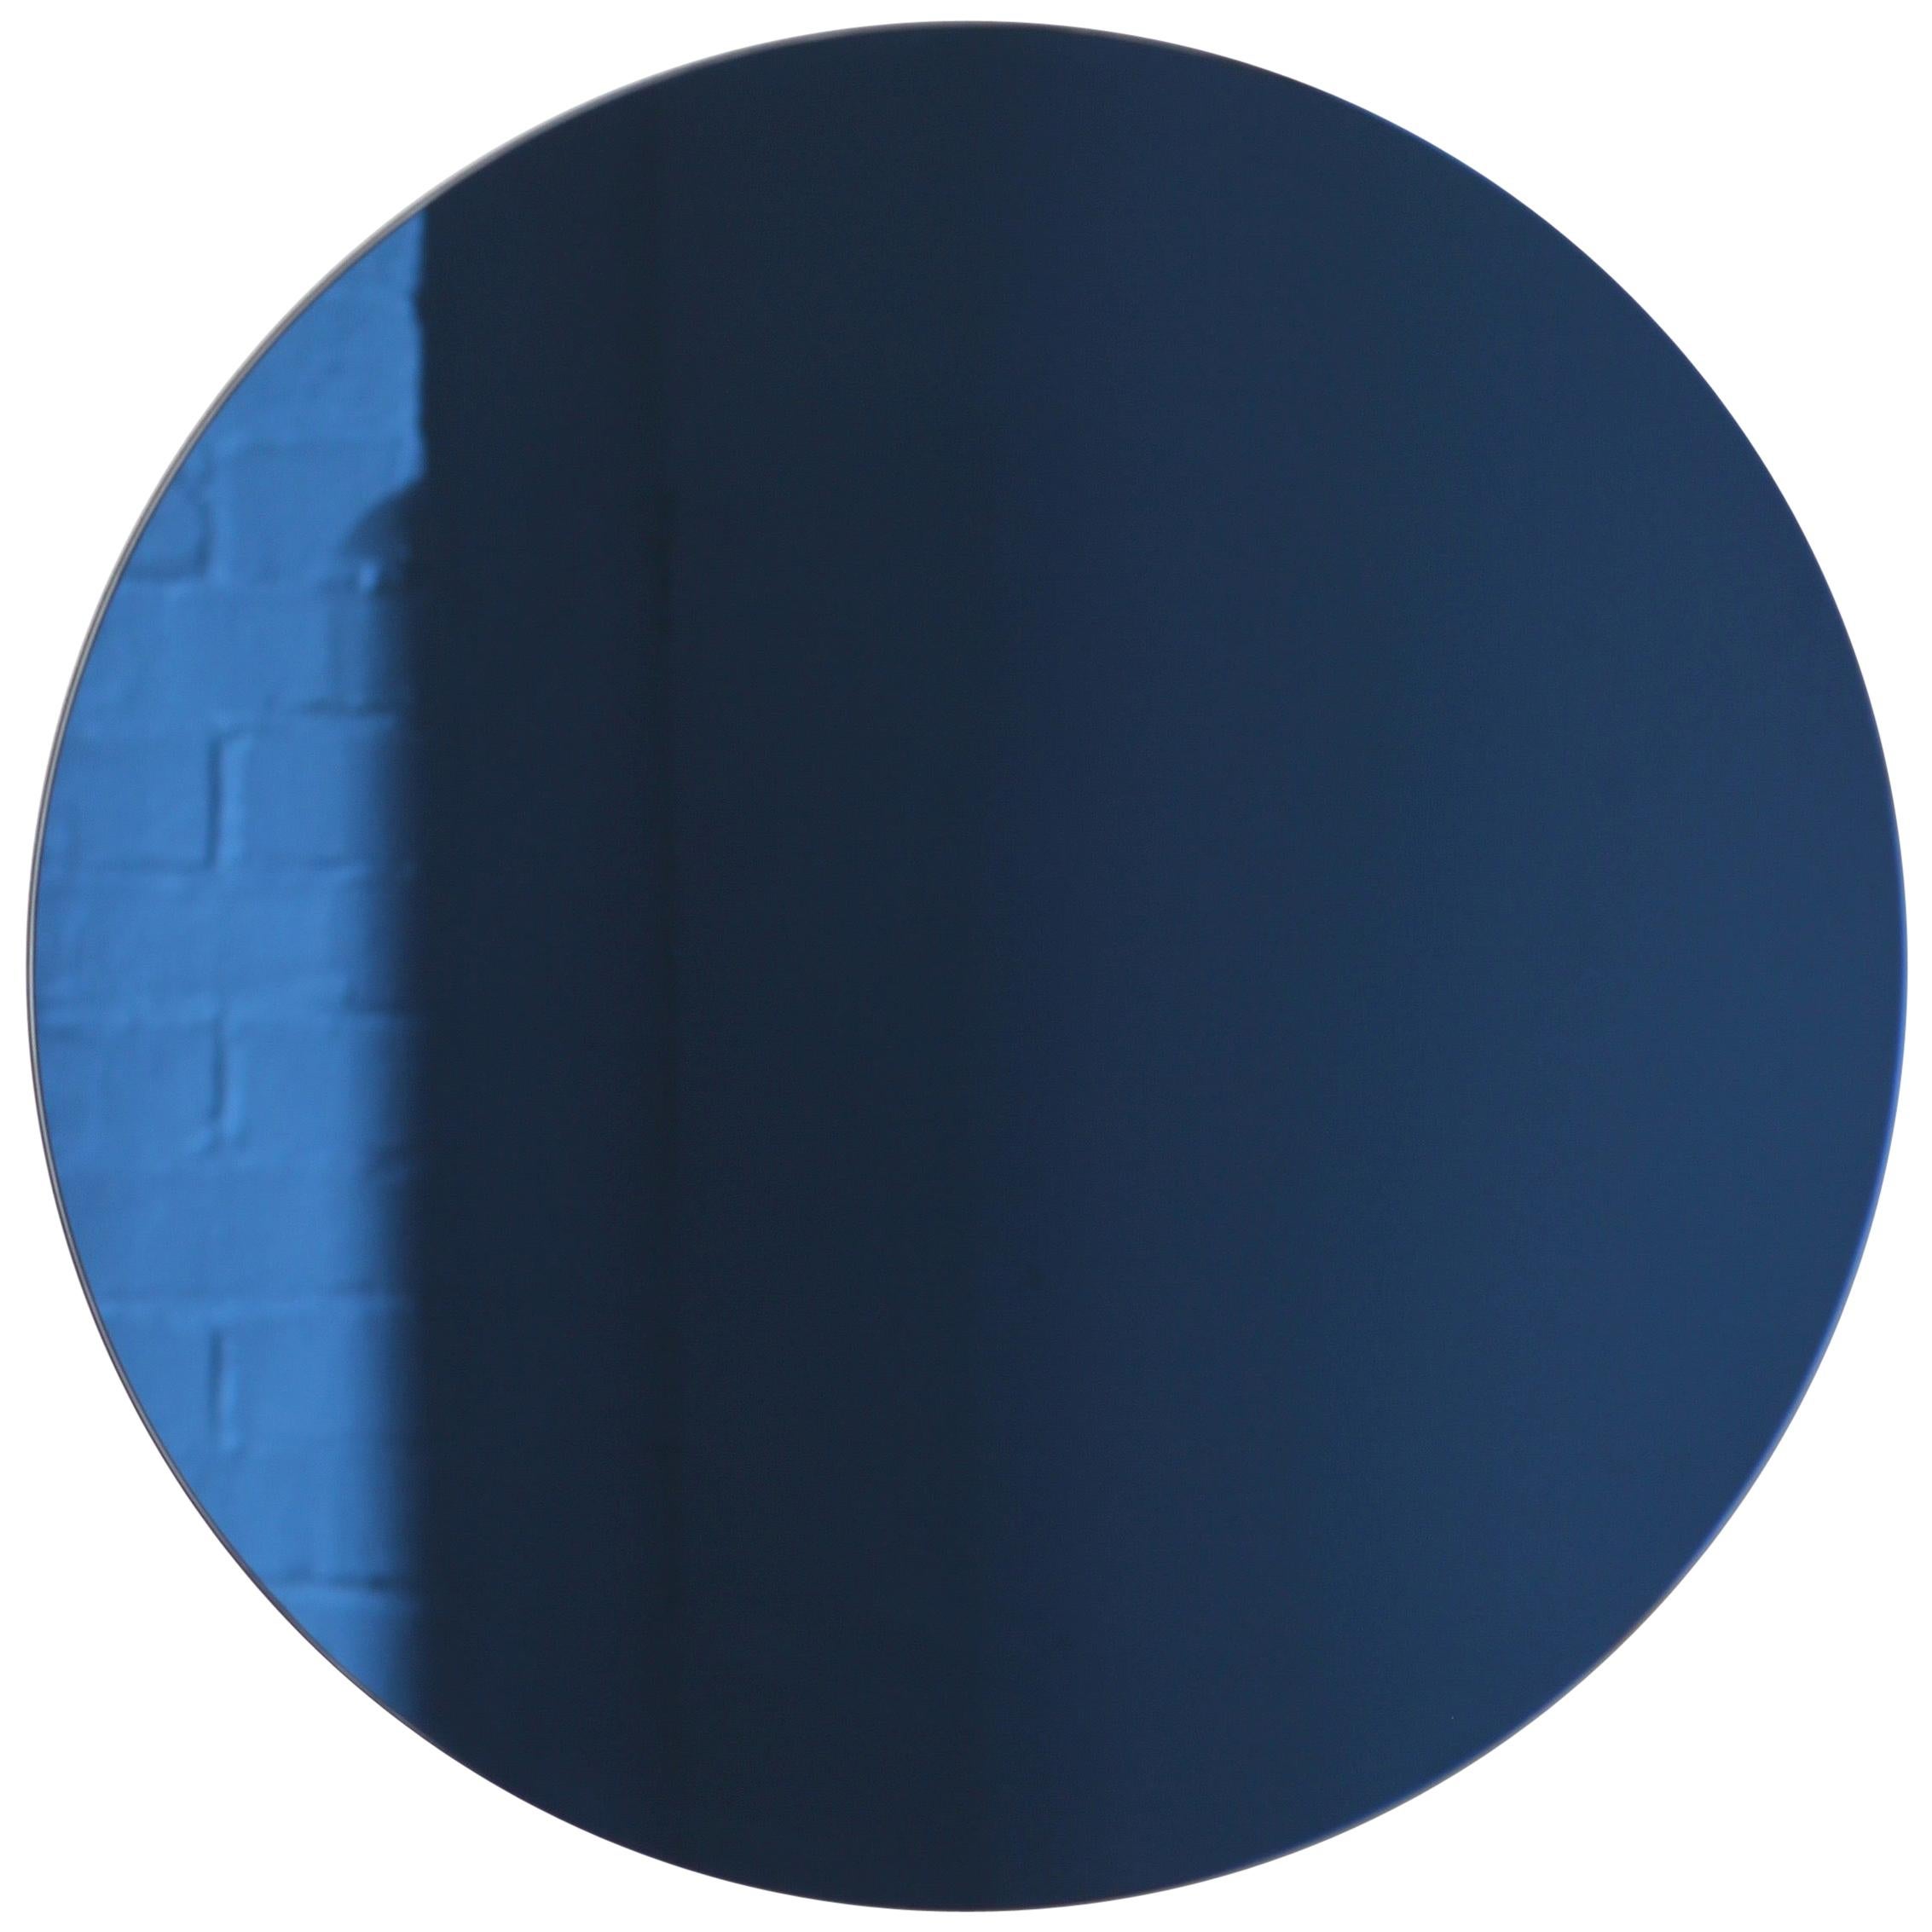 Orbis Blue Tinted Round Contemporary Frameless Mirror - Regular